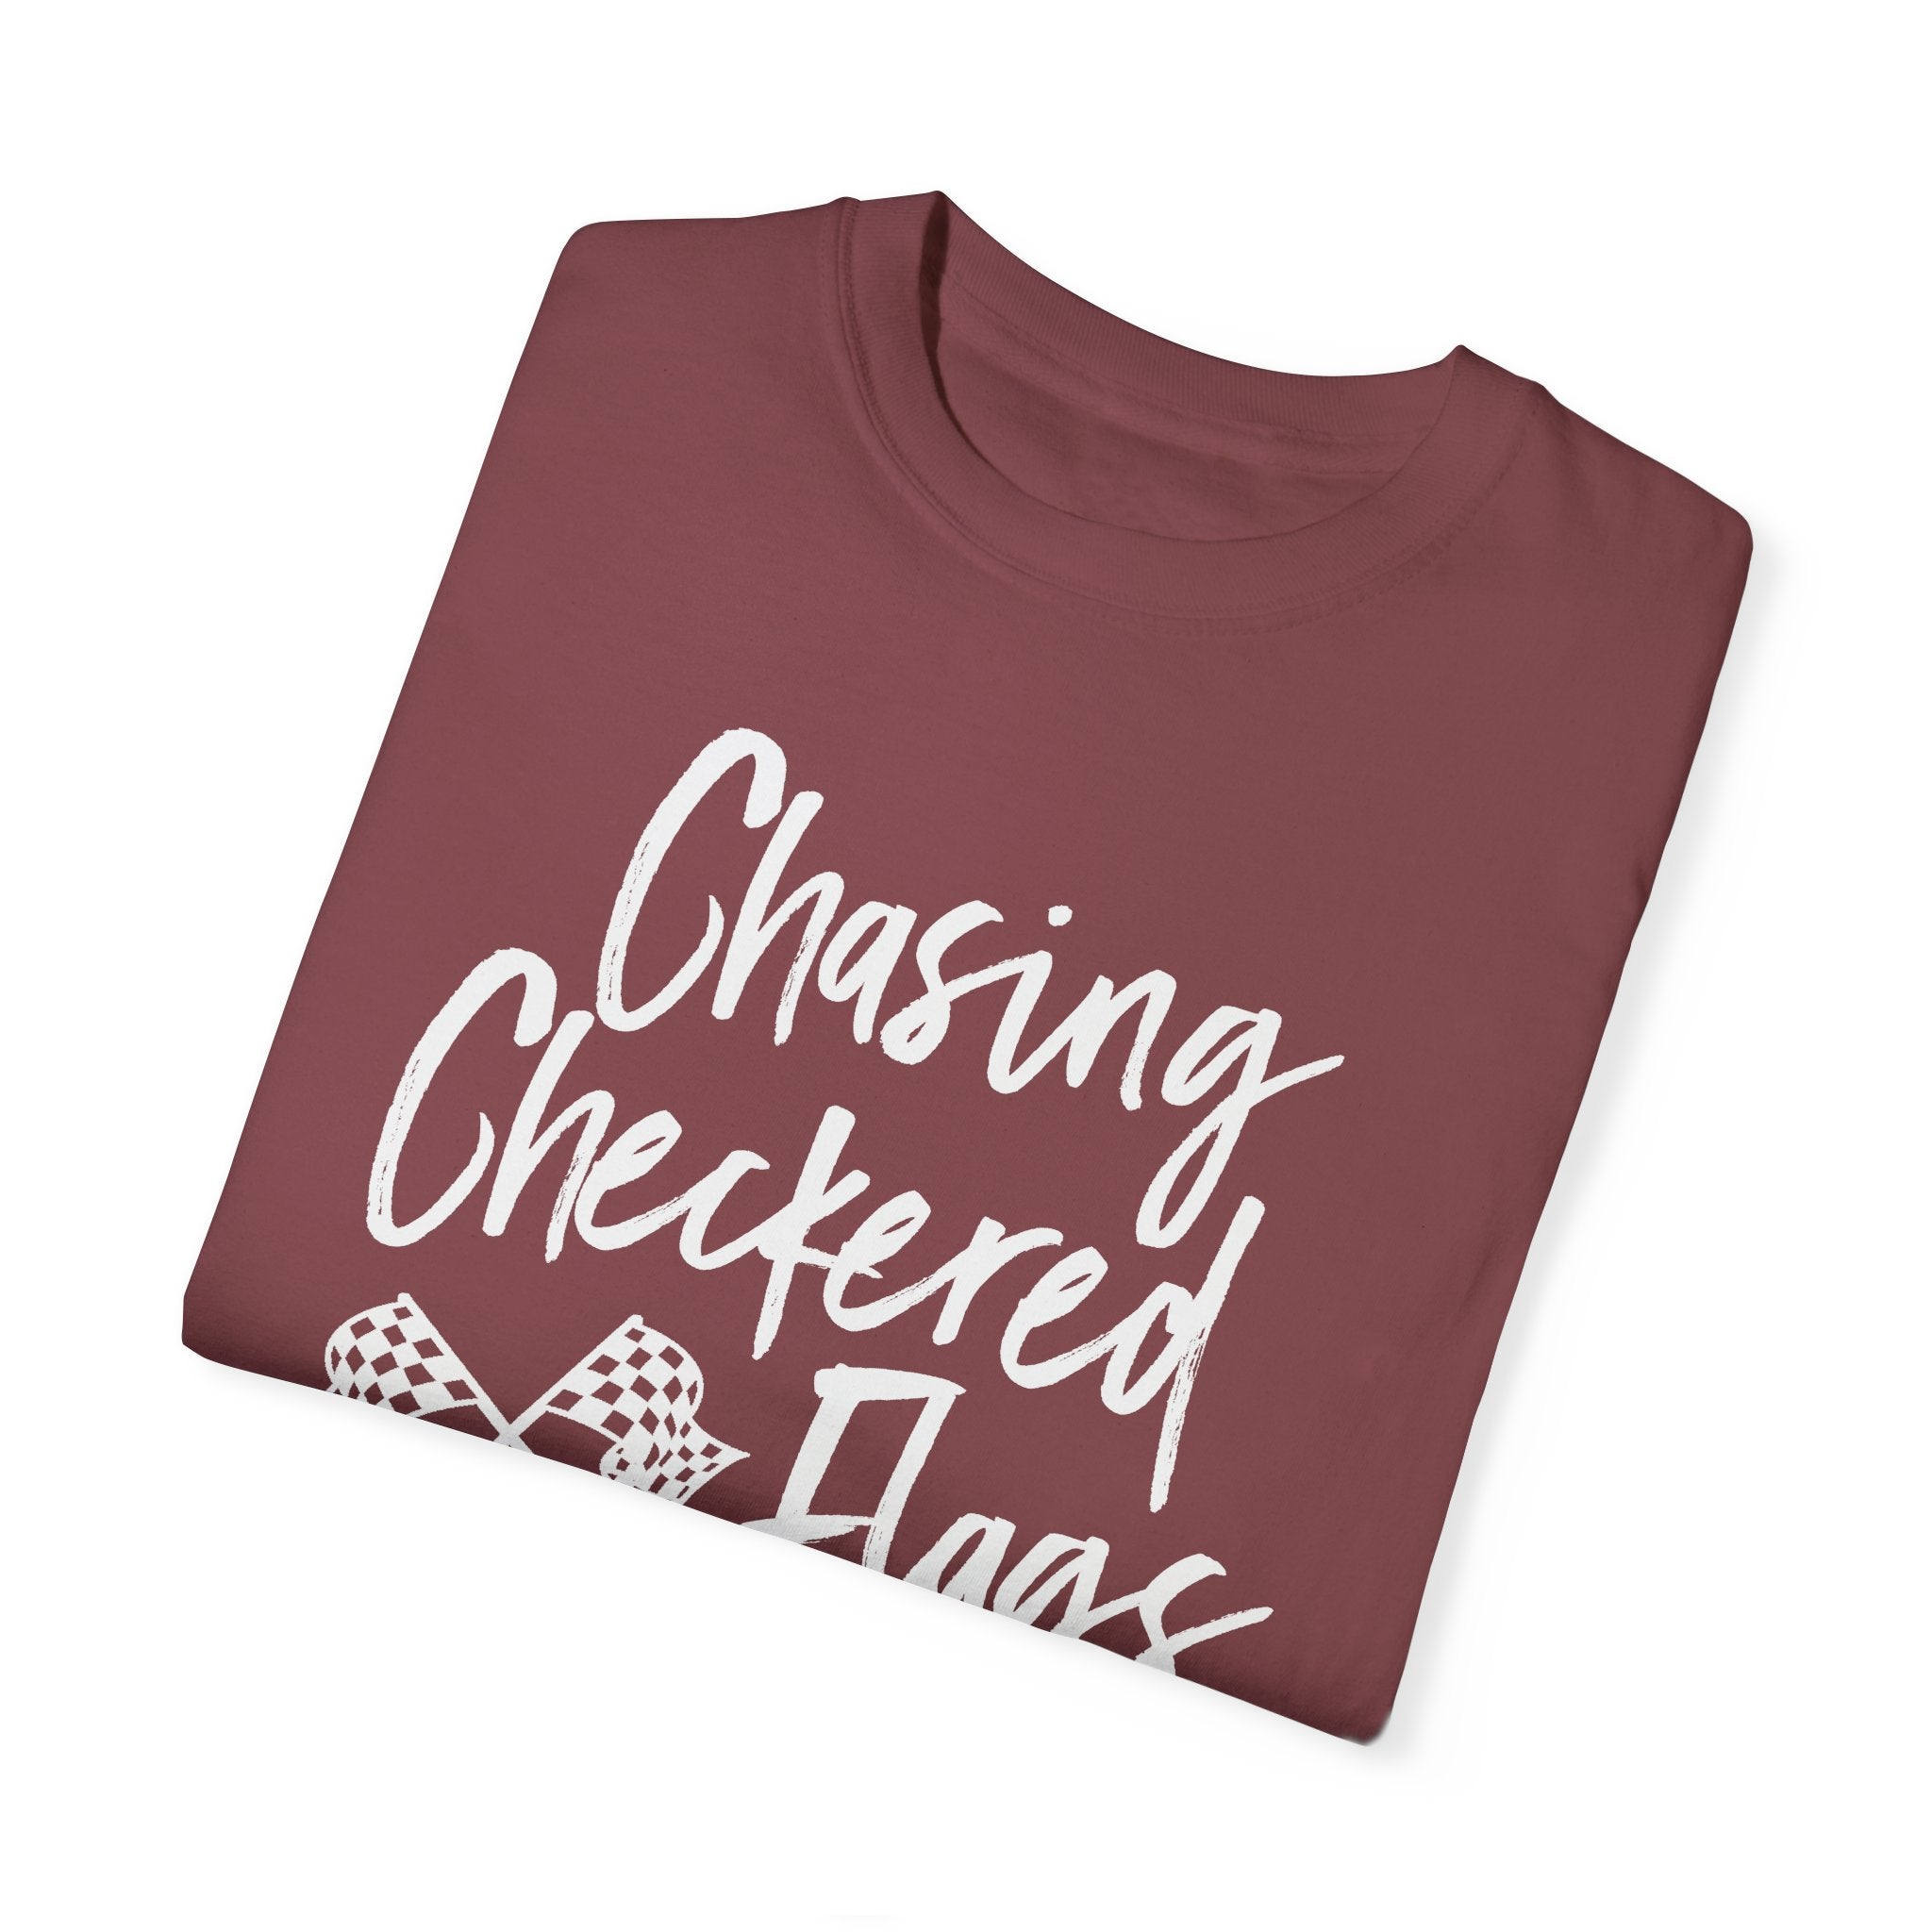 Chasing Checkered Flags Unisex Heavyweight Ladies Racing Tee